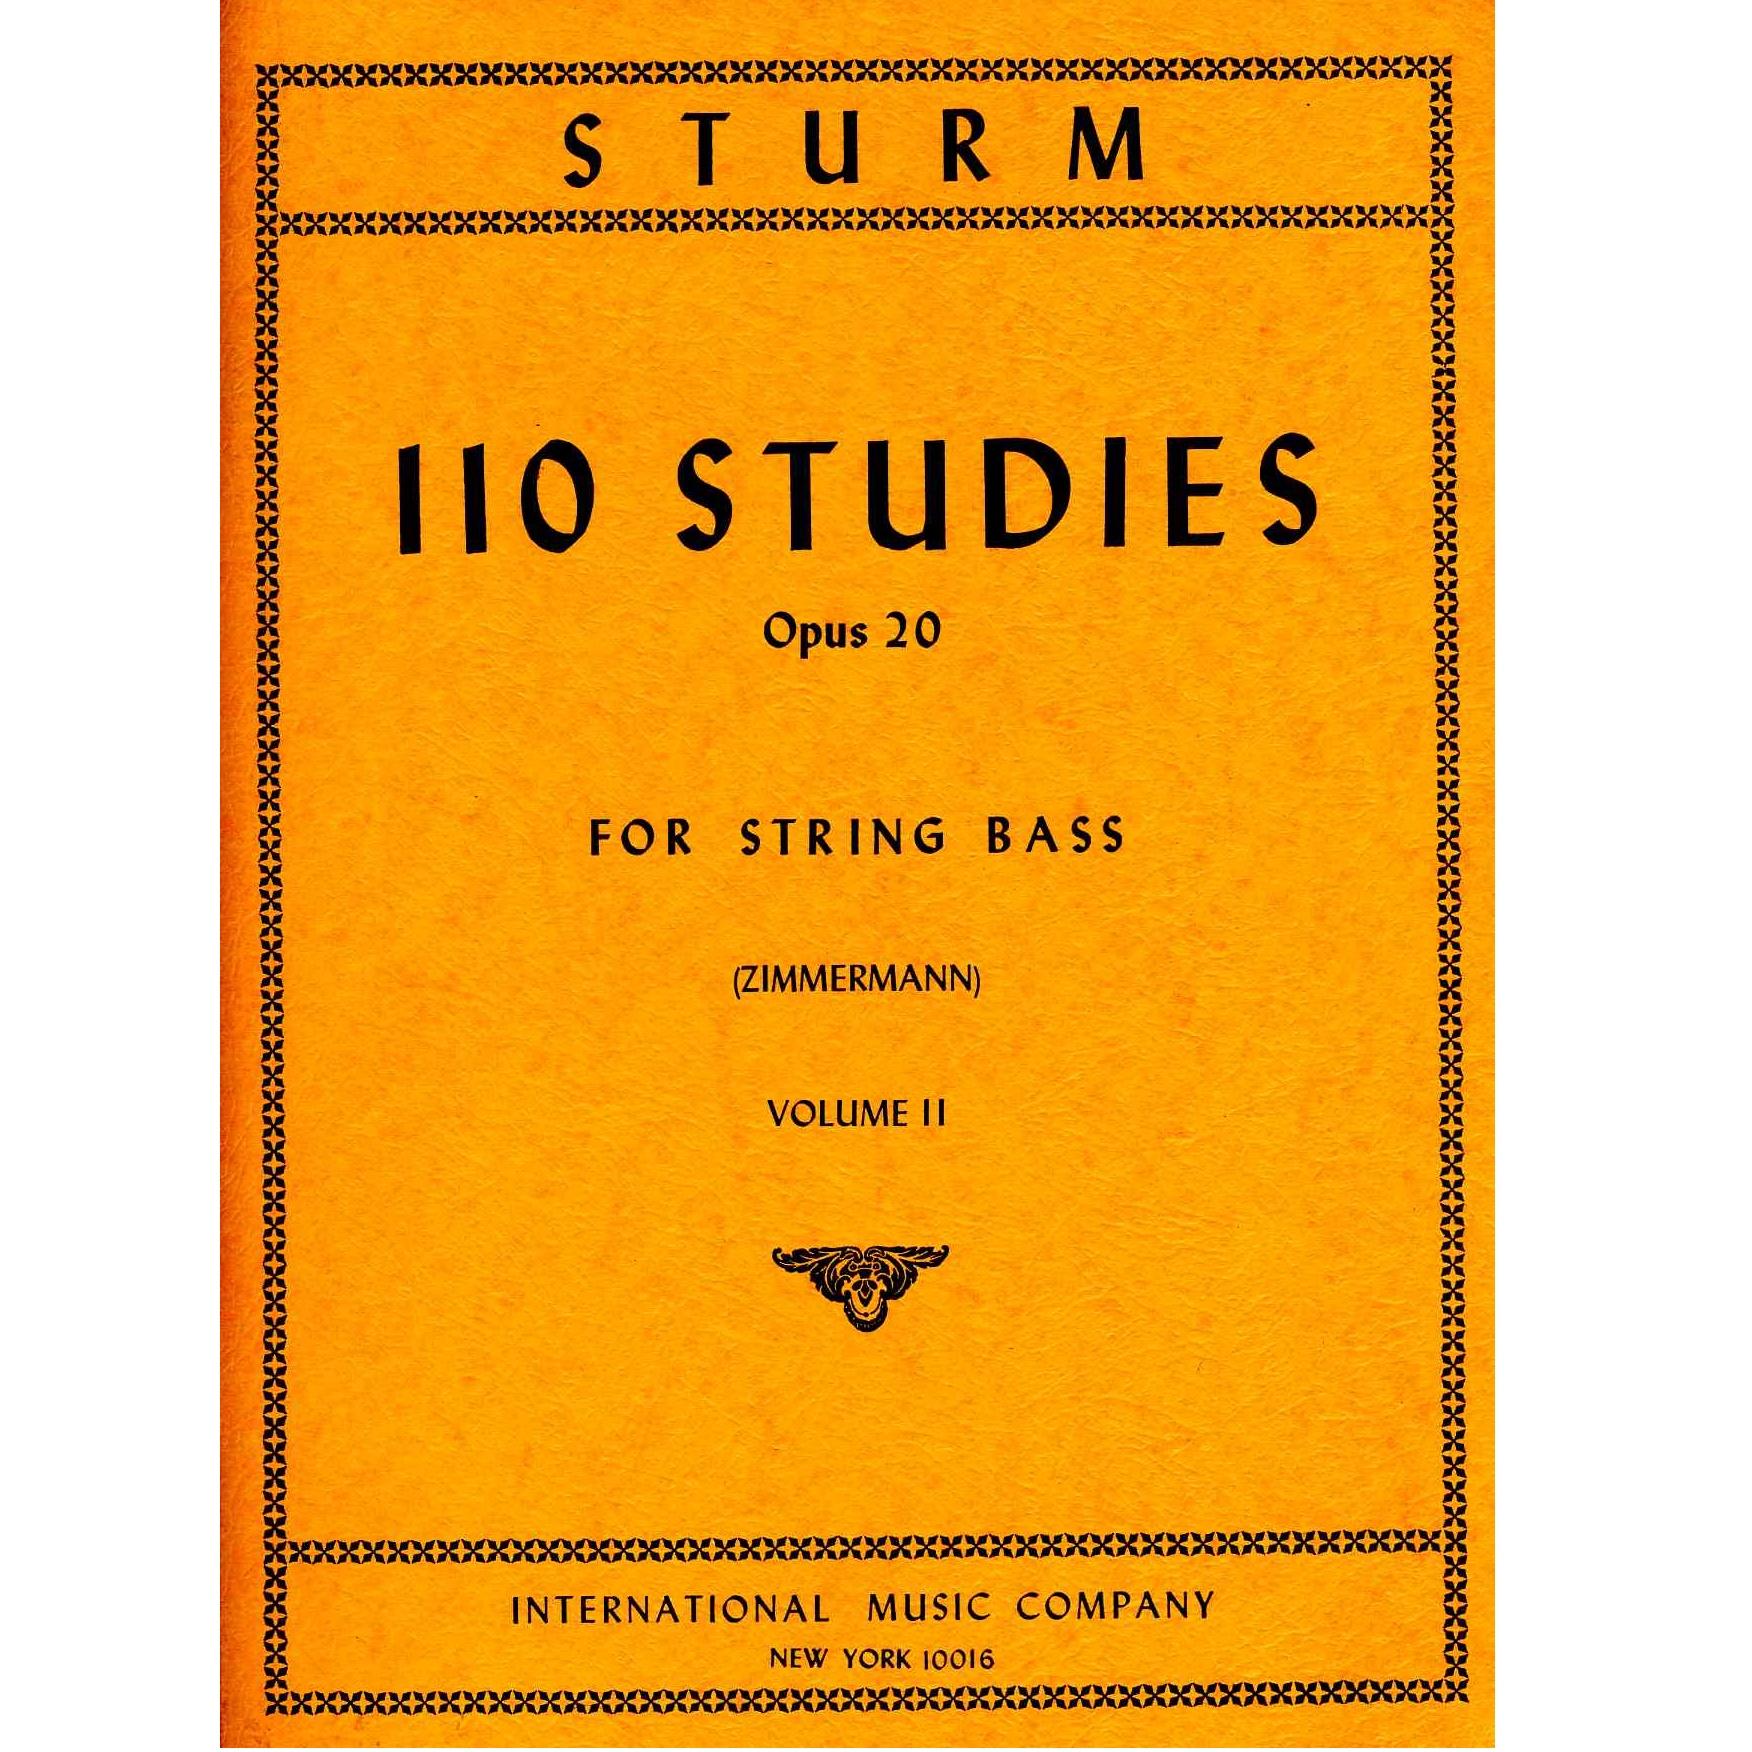 Sturm 110 Studies Opus 20 for String Bass (Zimmermann) Volume II - International Music Company 